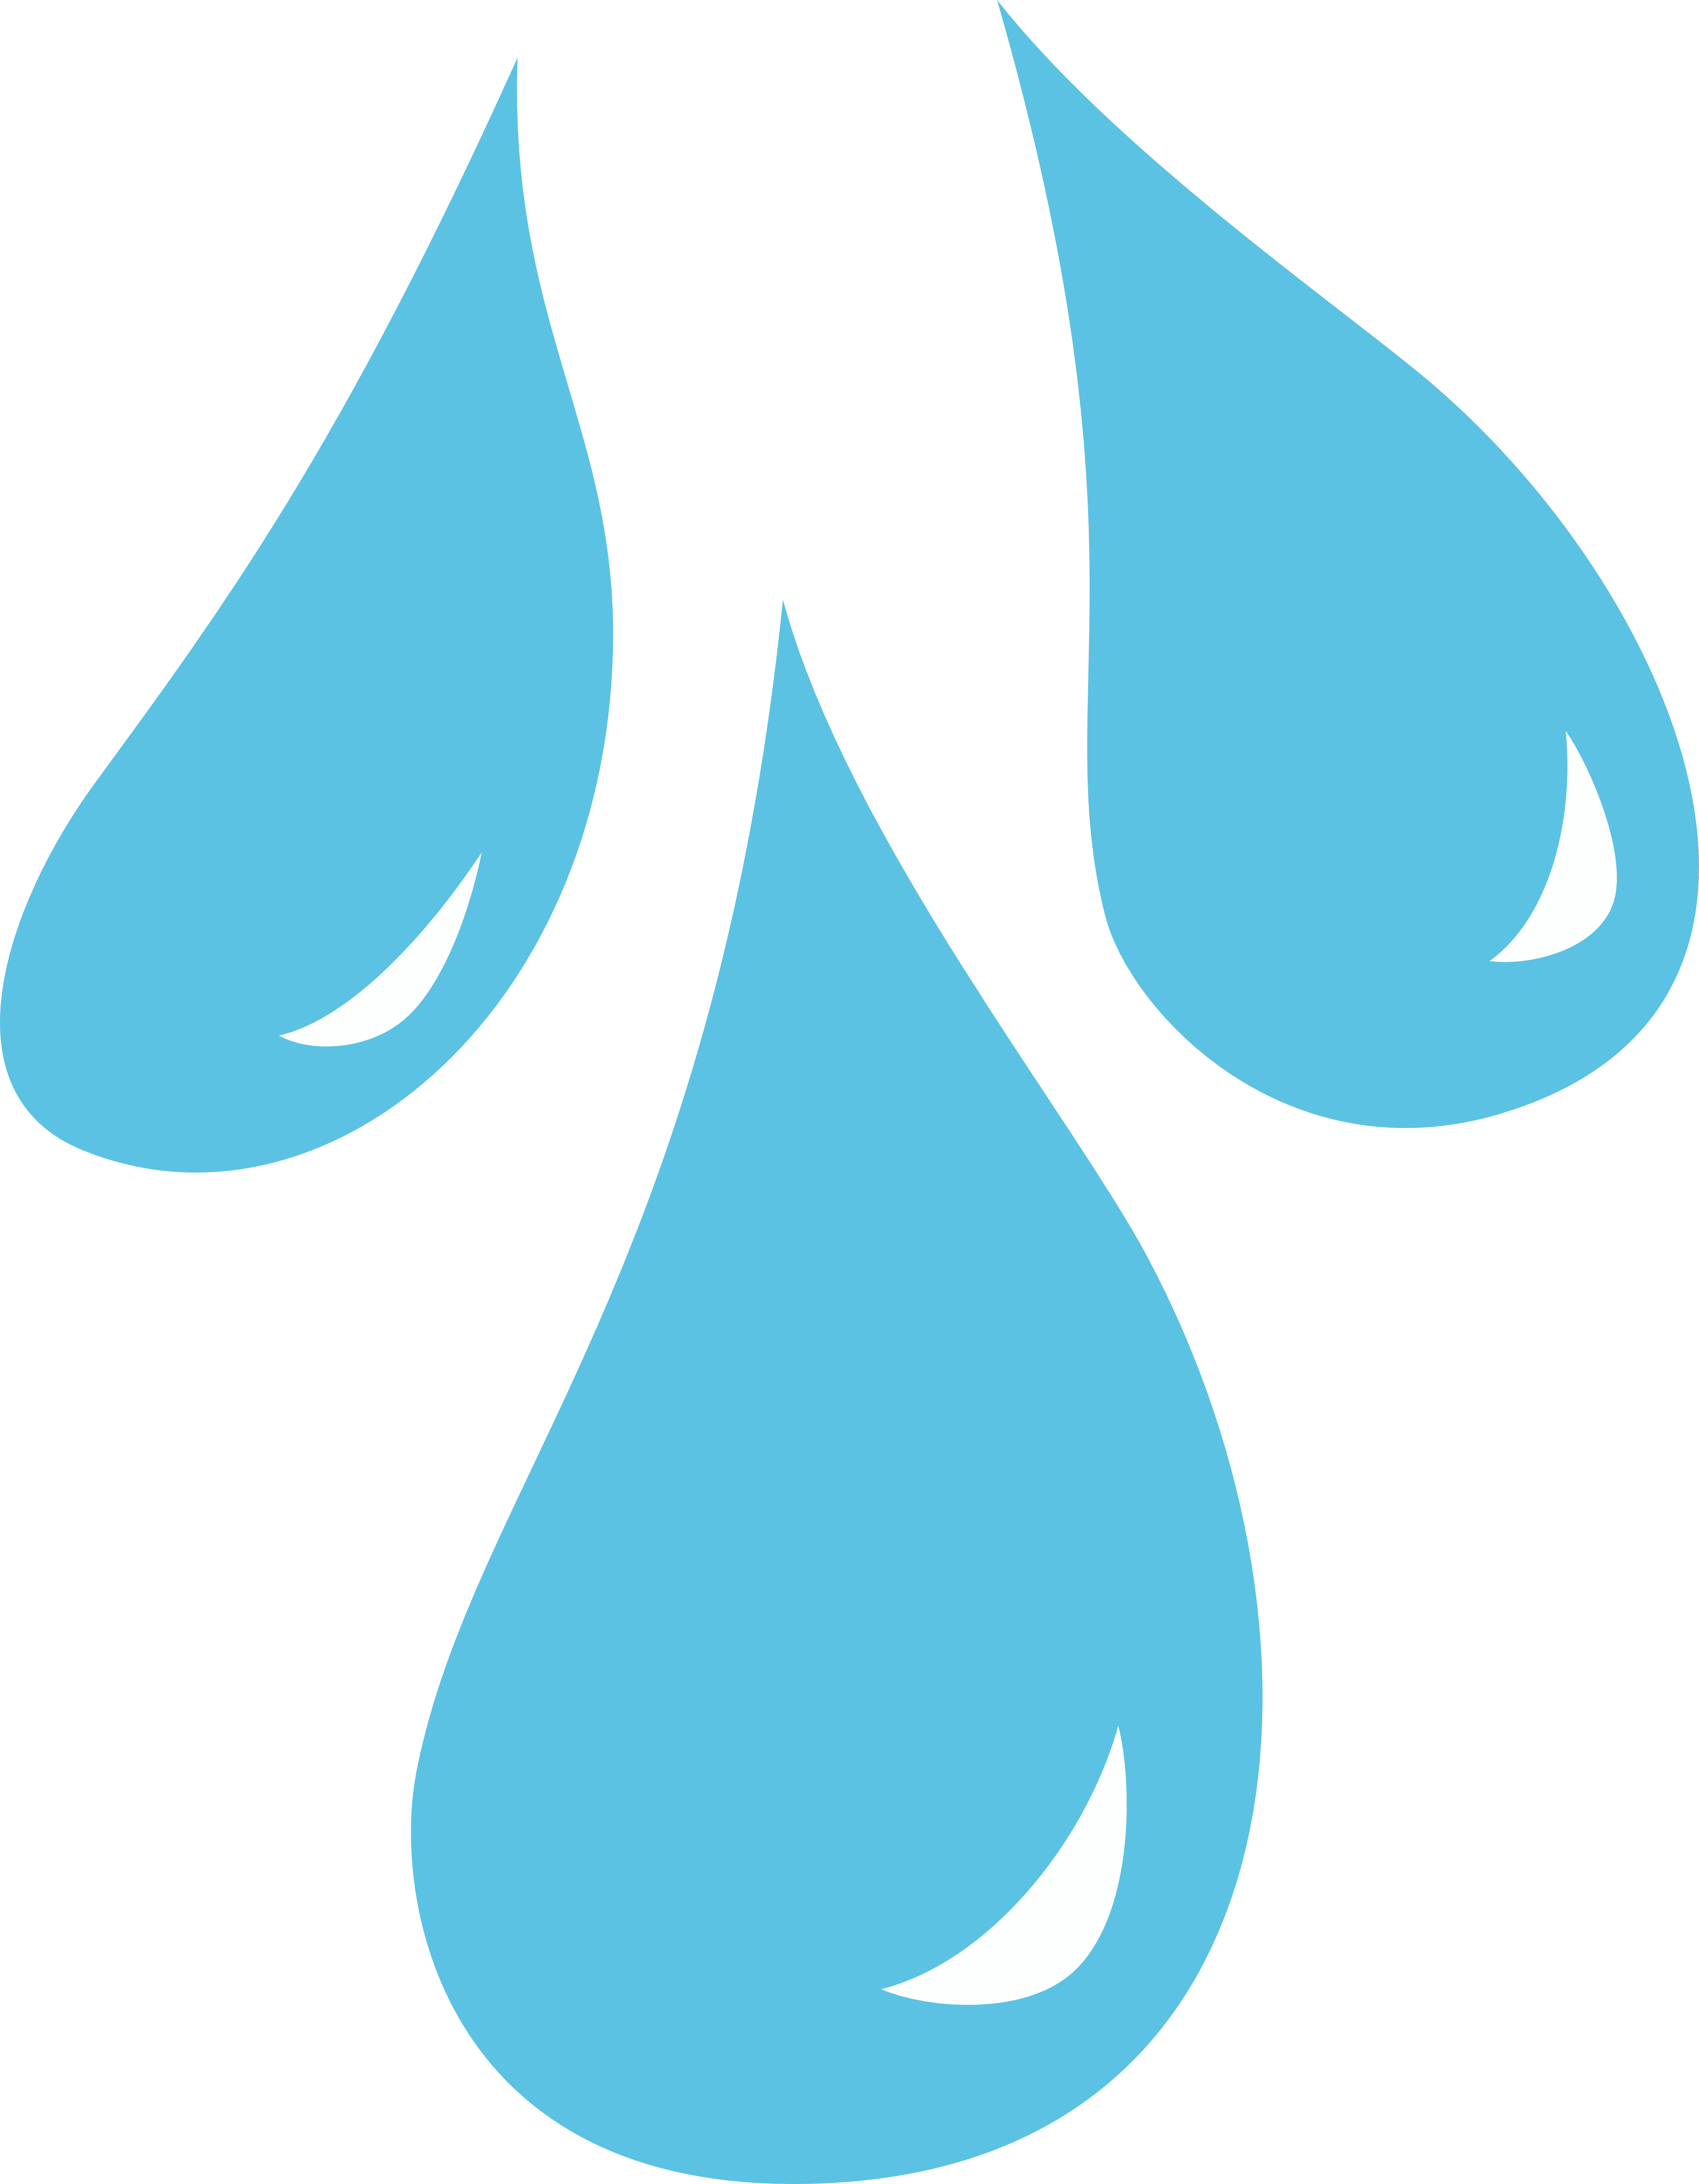 Best Photos of Tear Drop Cartoon - Water Drop Clip Art, Tear Drop ...